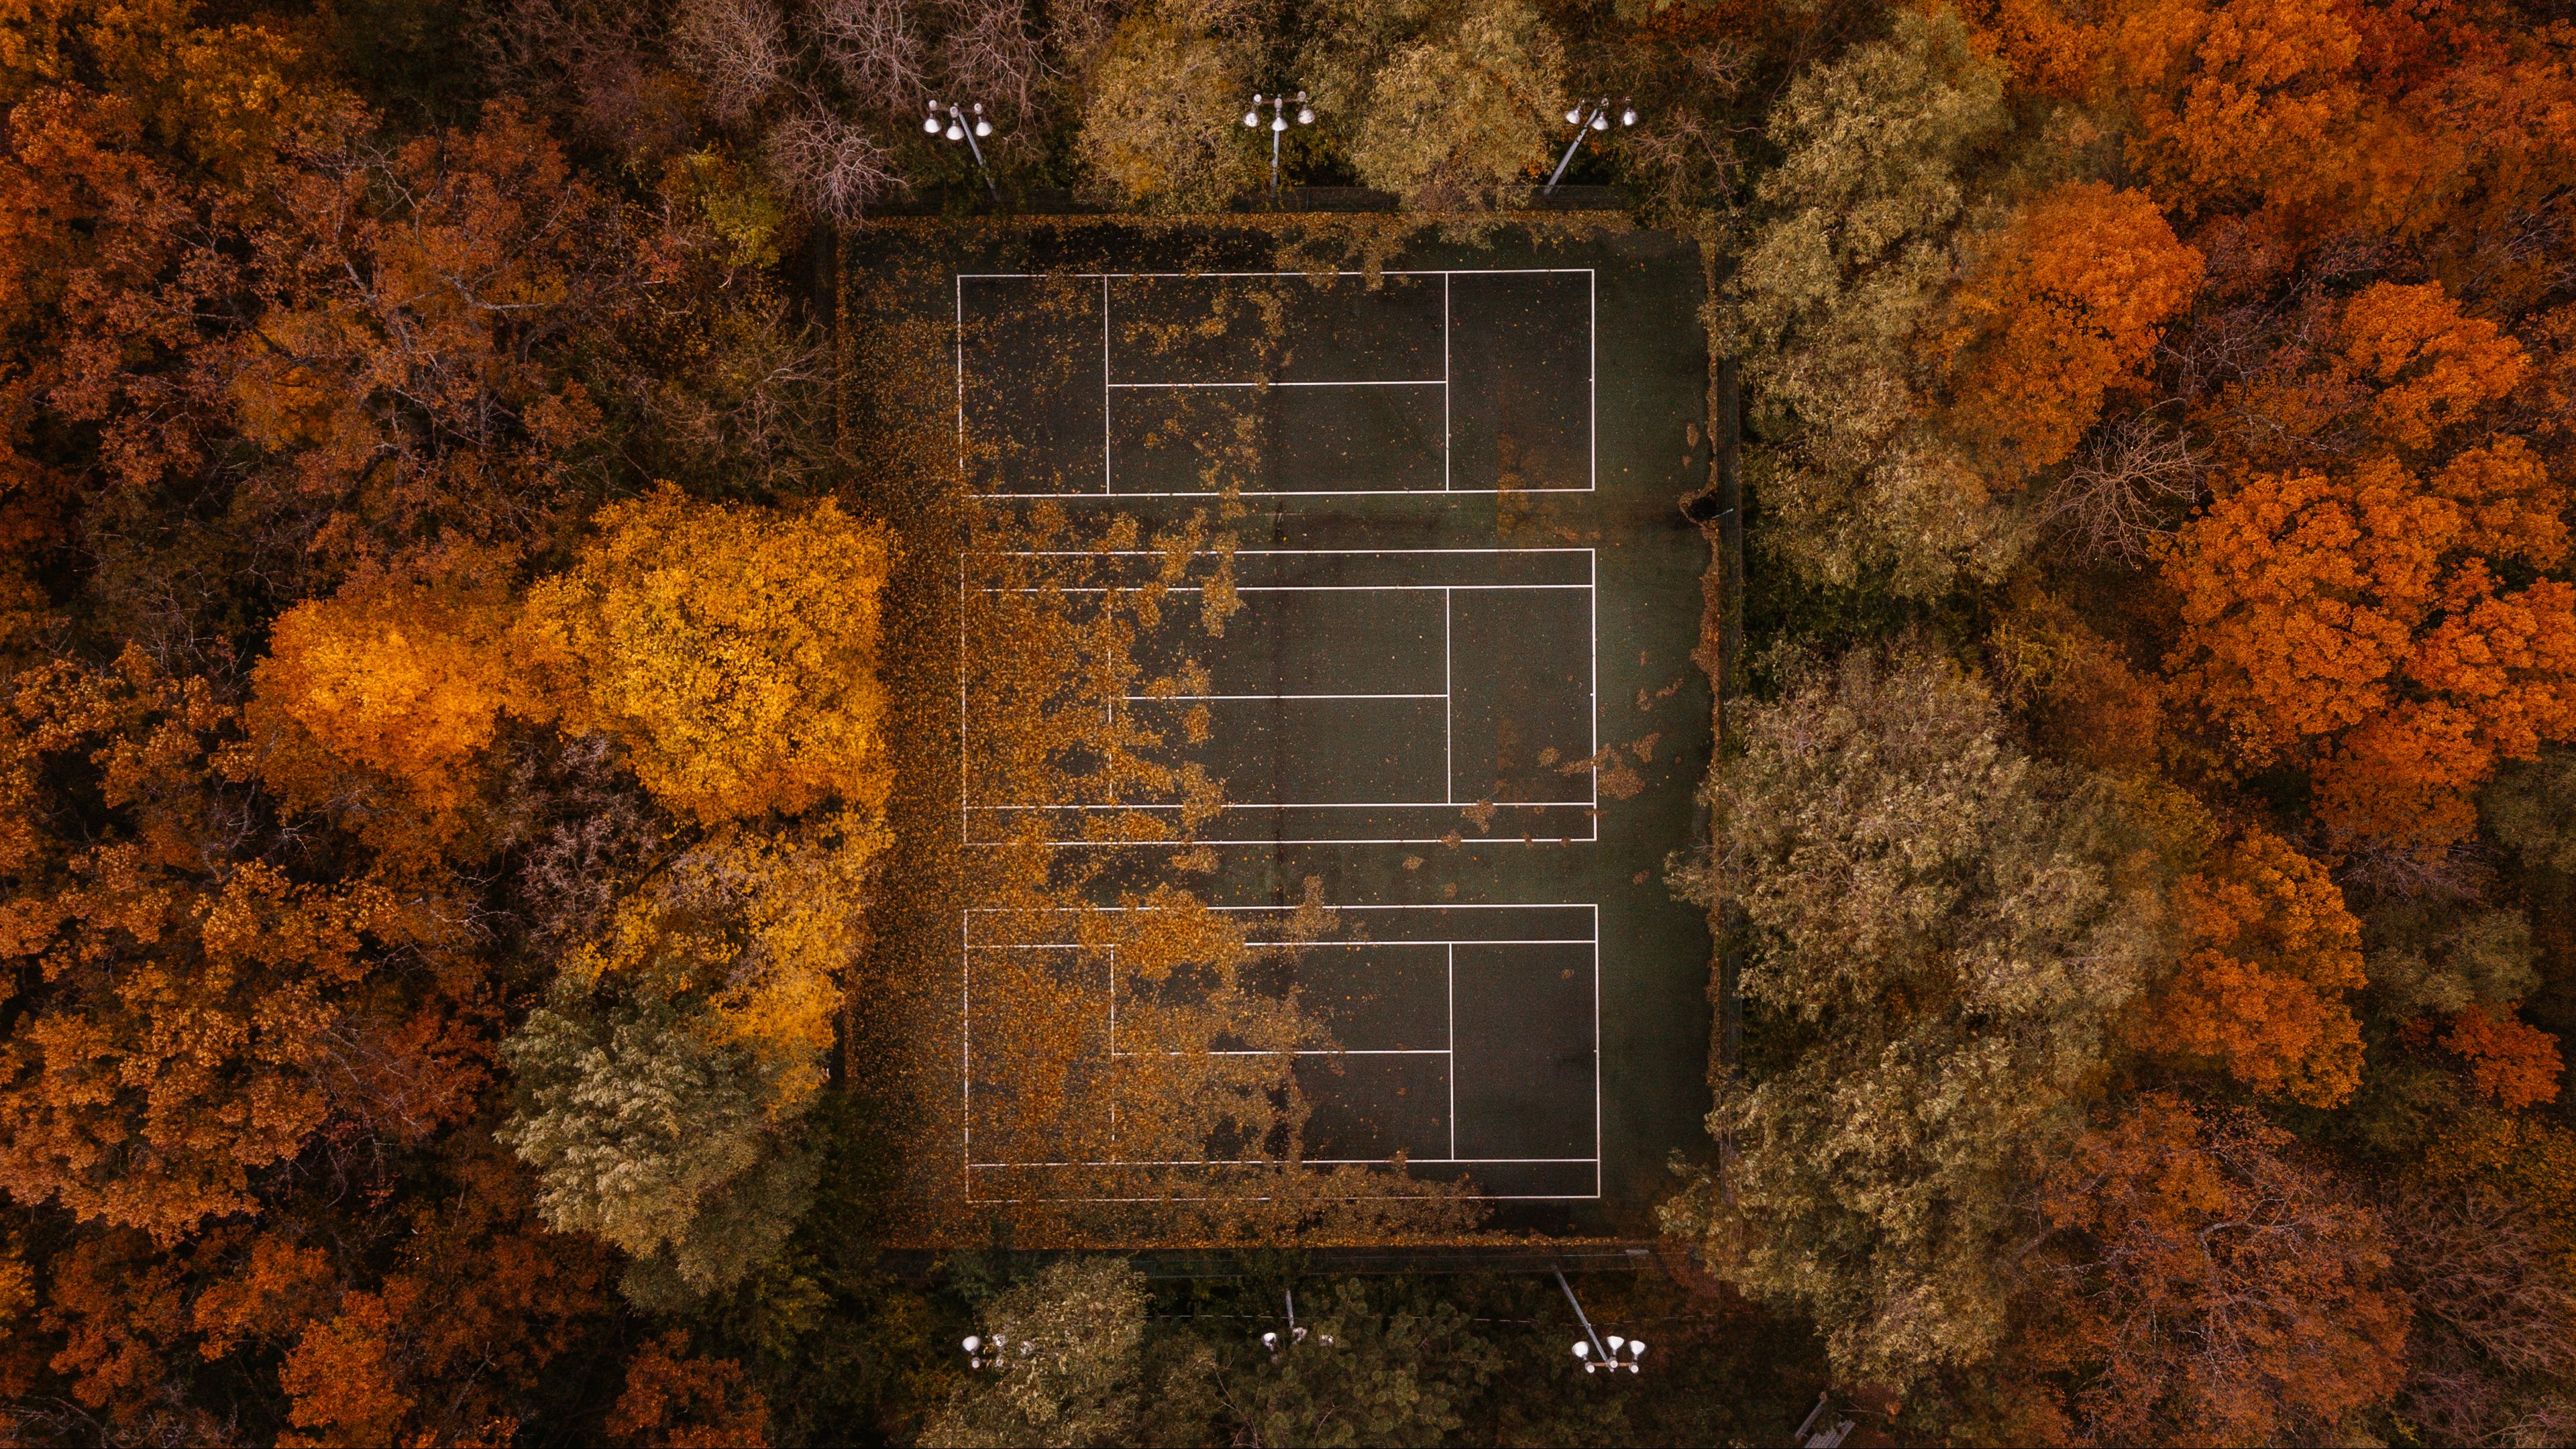 Download wallpaper 3840x2160 tennis, tennis court, autumn, aerial view 4k  uhd 16:9 hd background